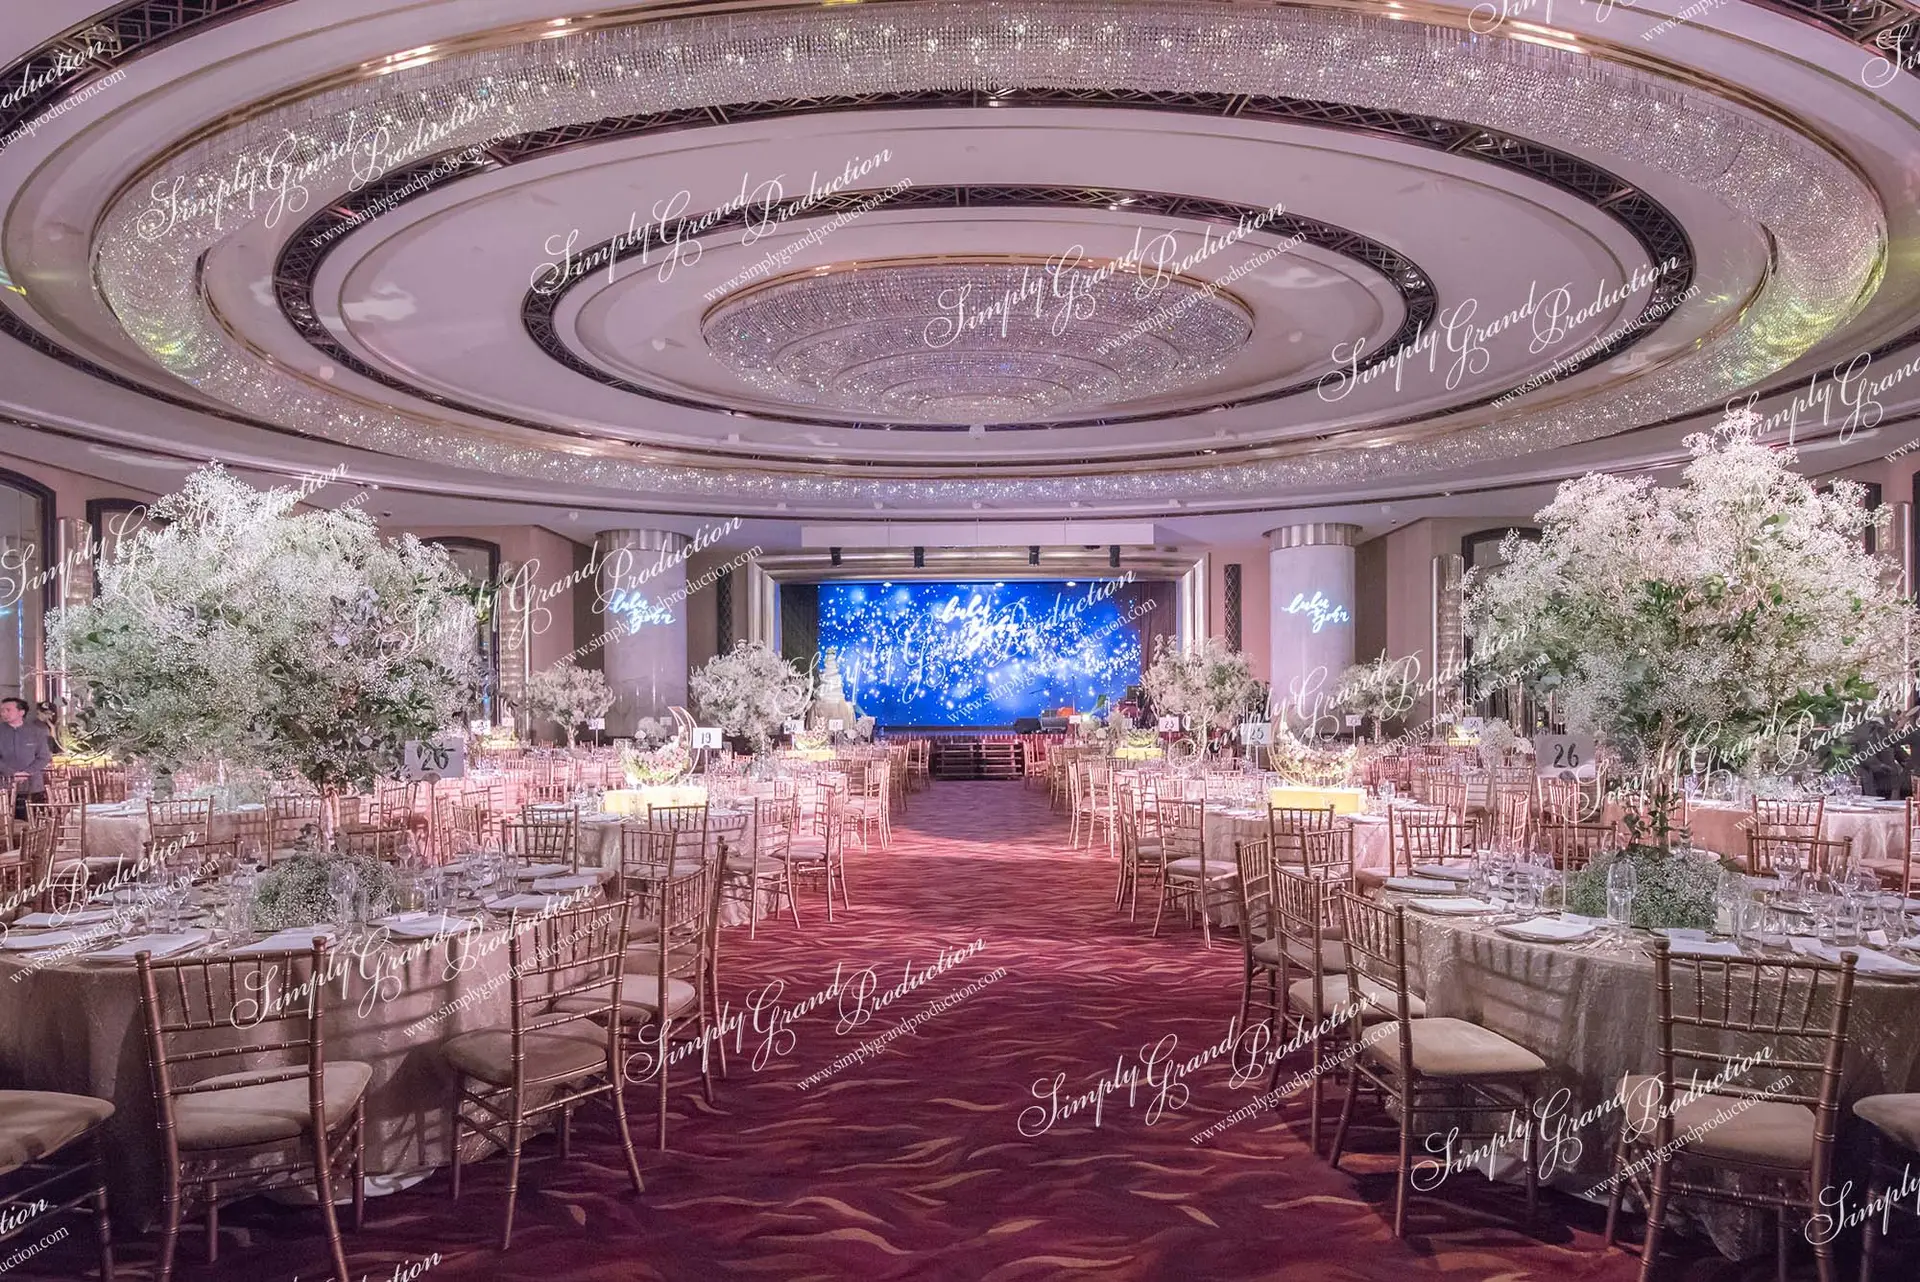 Simply_Grand_Production_Ballroom_wedding_decoration_banquet_aisle_head_table_weddinginspo_floral_Grand_Hyatt_3_5_wm